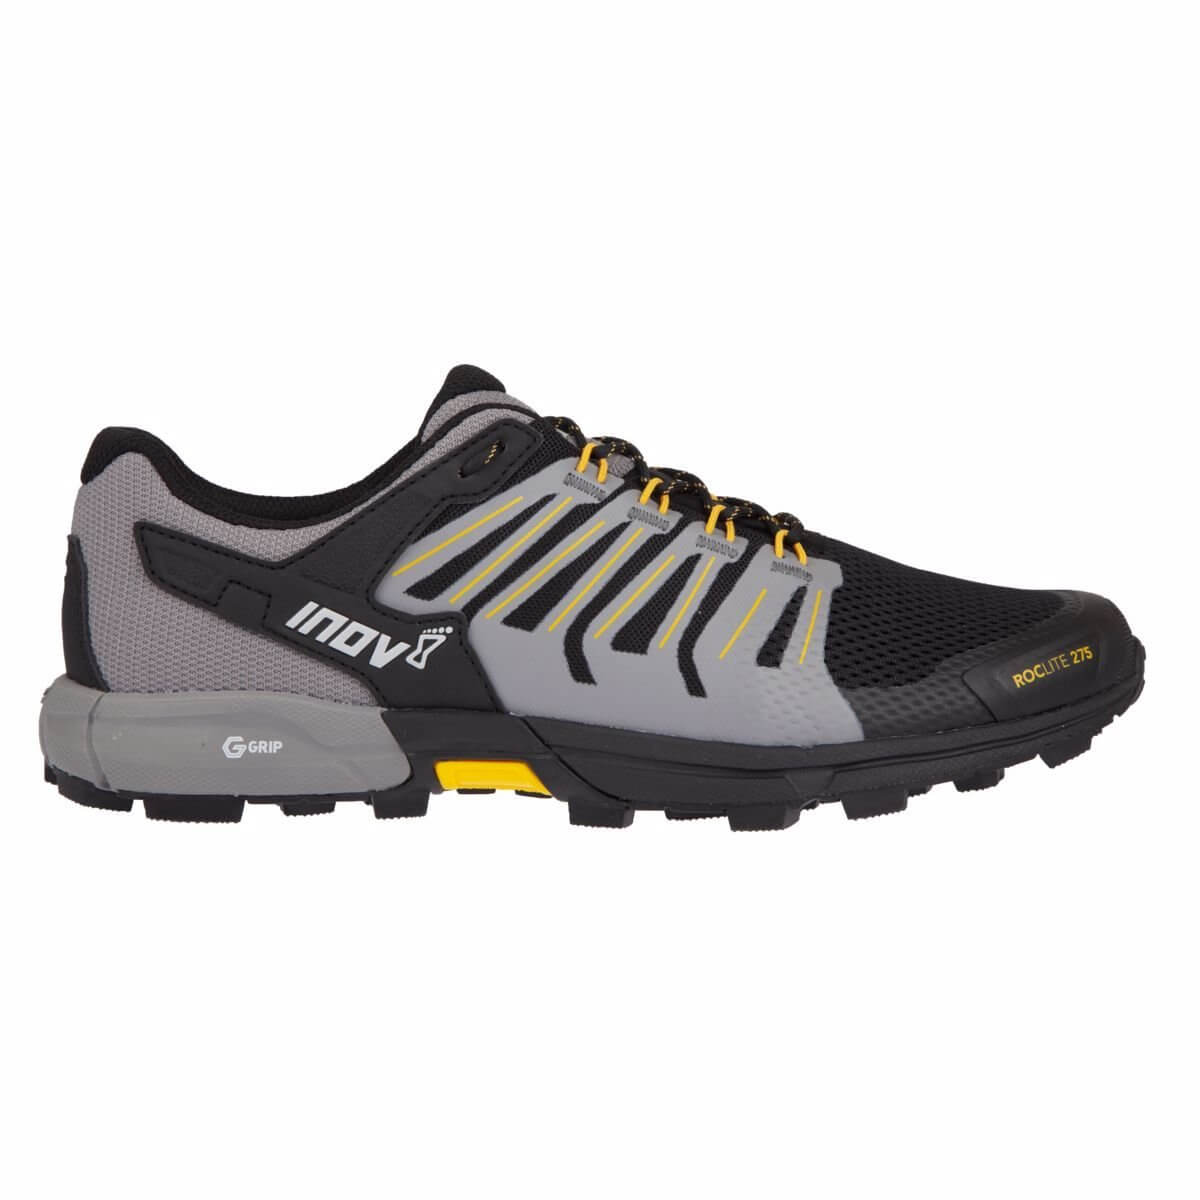 Bežecké topánky Inov-8 ROCLITE 275 (M) black/yellow černá se žlutou